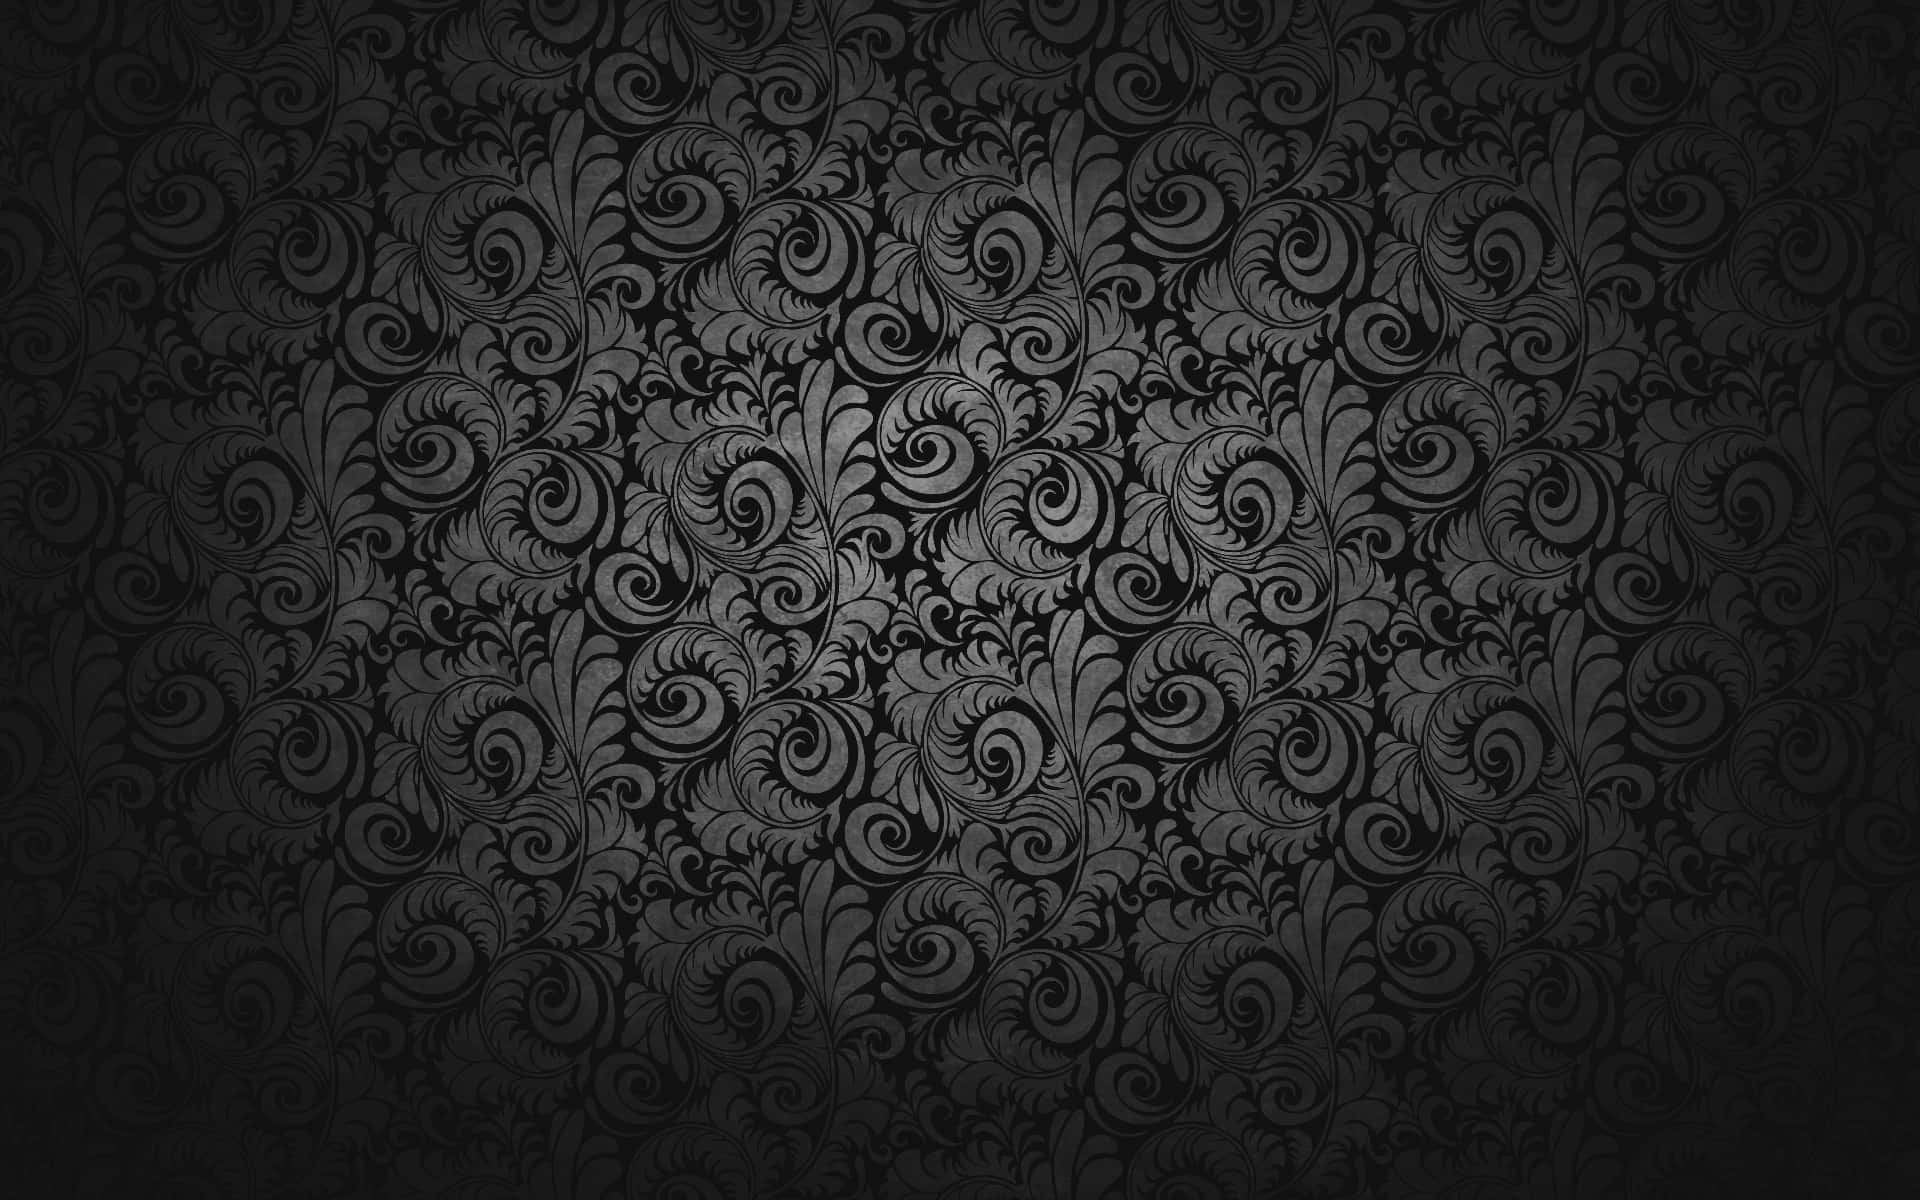 Black Wallpaper With Swirls And Swirls Wallpaper